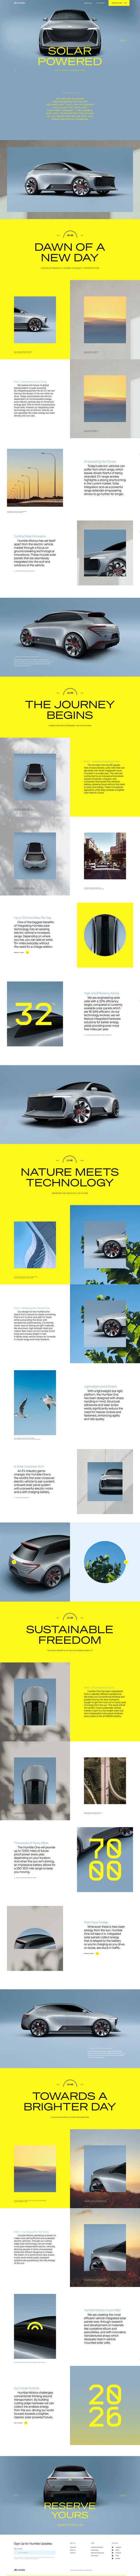 Humble Motors Landing Page Example: Humble Motors is a tech company developing long range solar electric vehicles.